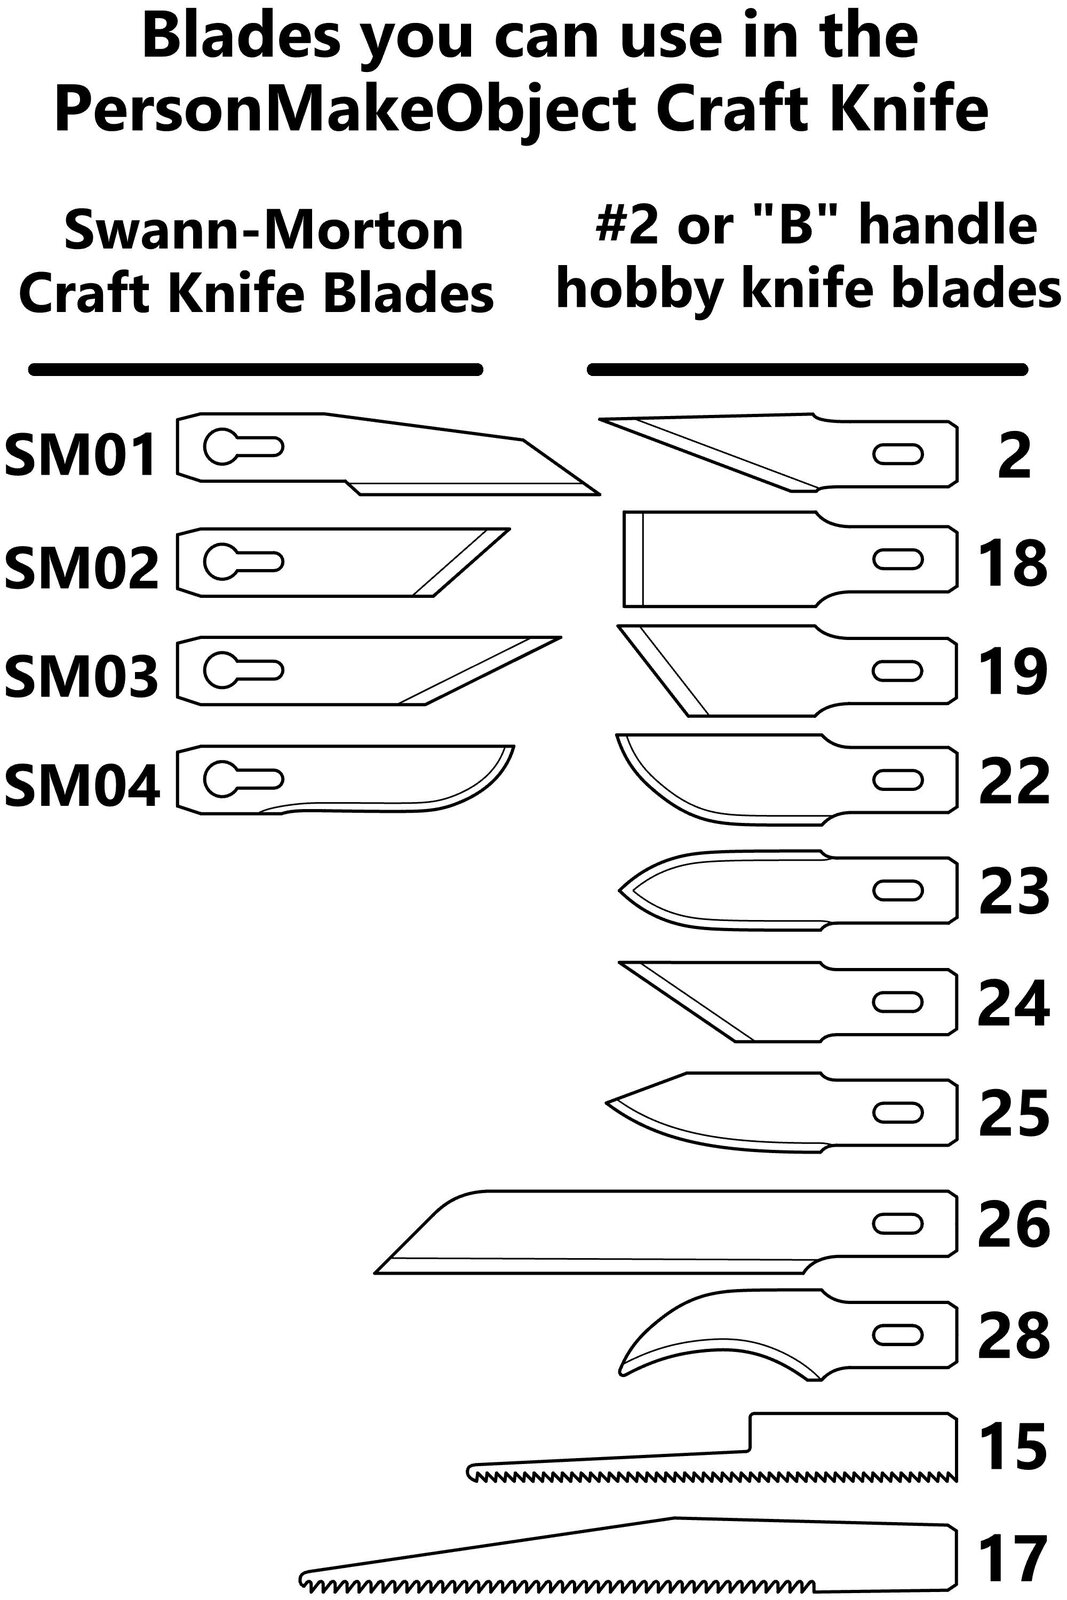 blades_line (1).jpg